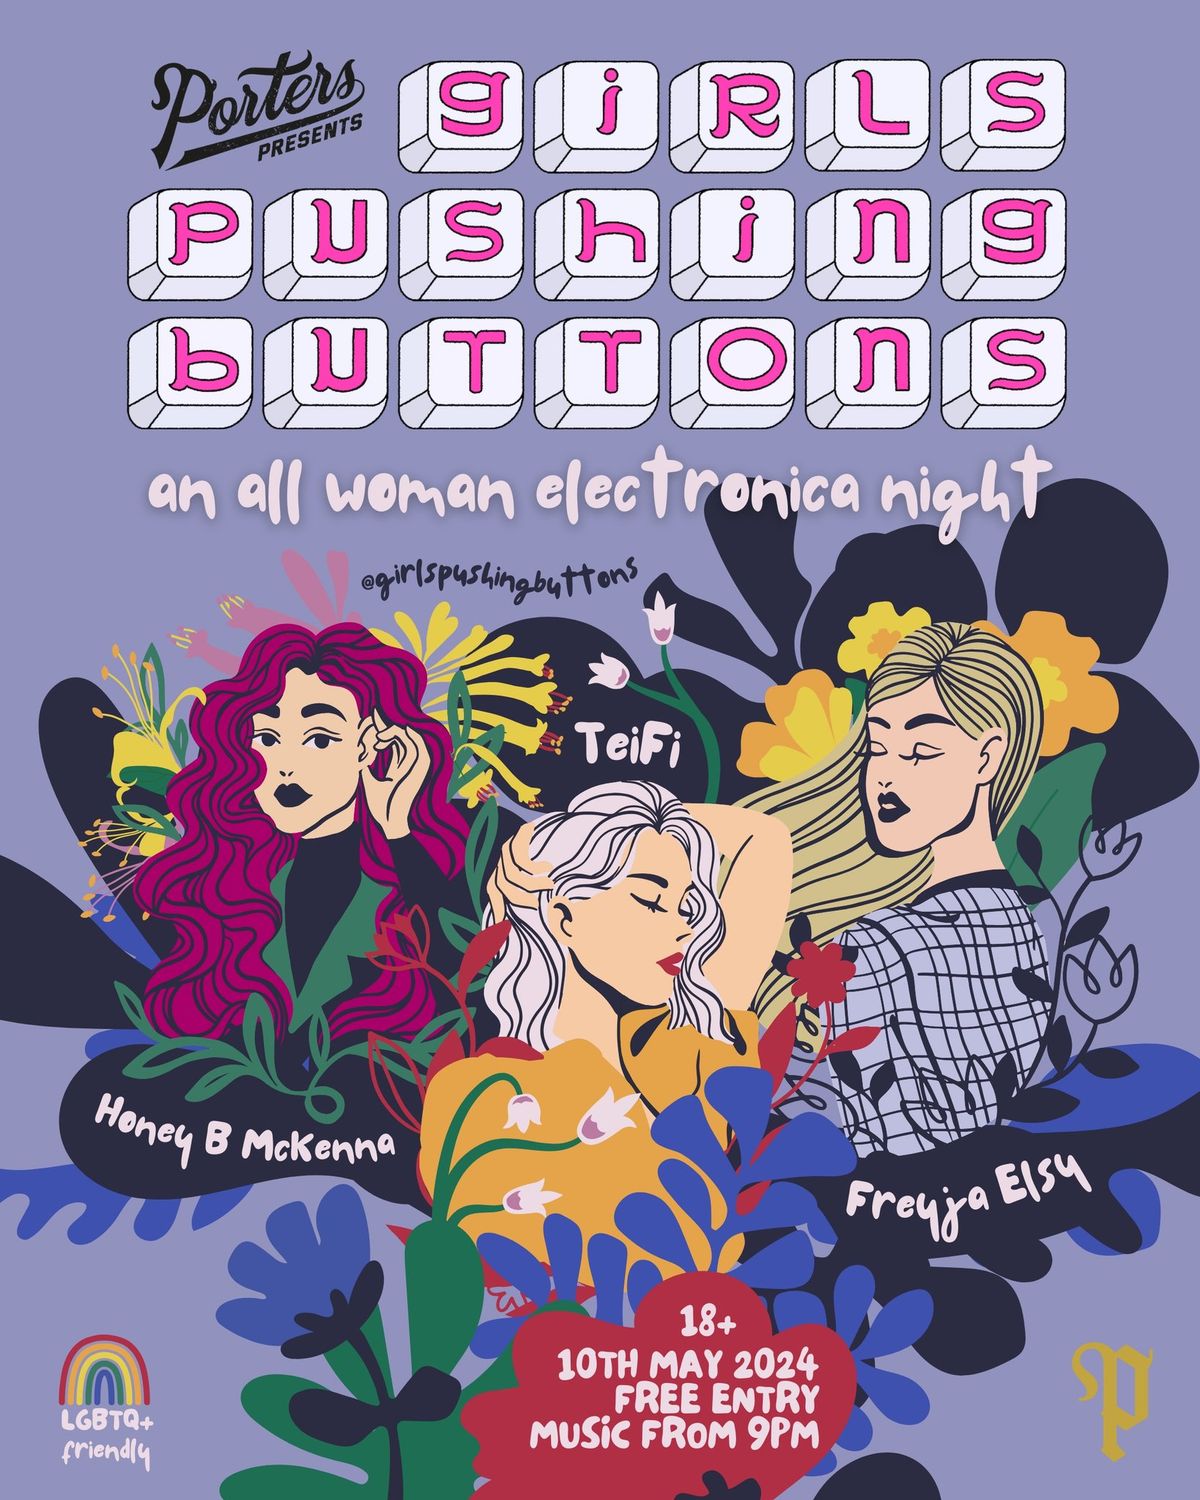 Girls Pushing Buttons - Teifi, Freyja Elsy, Honey B McKenna